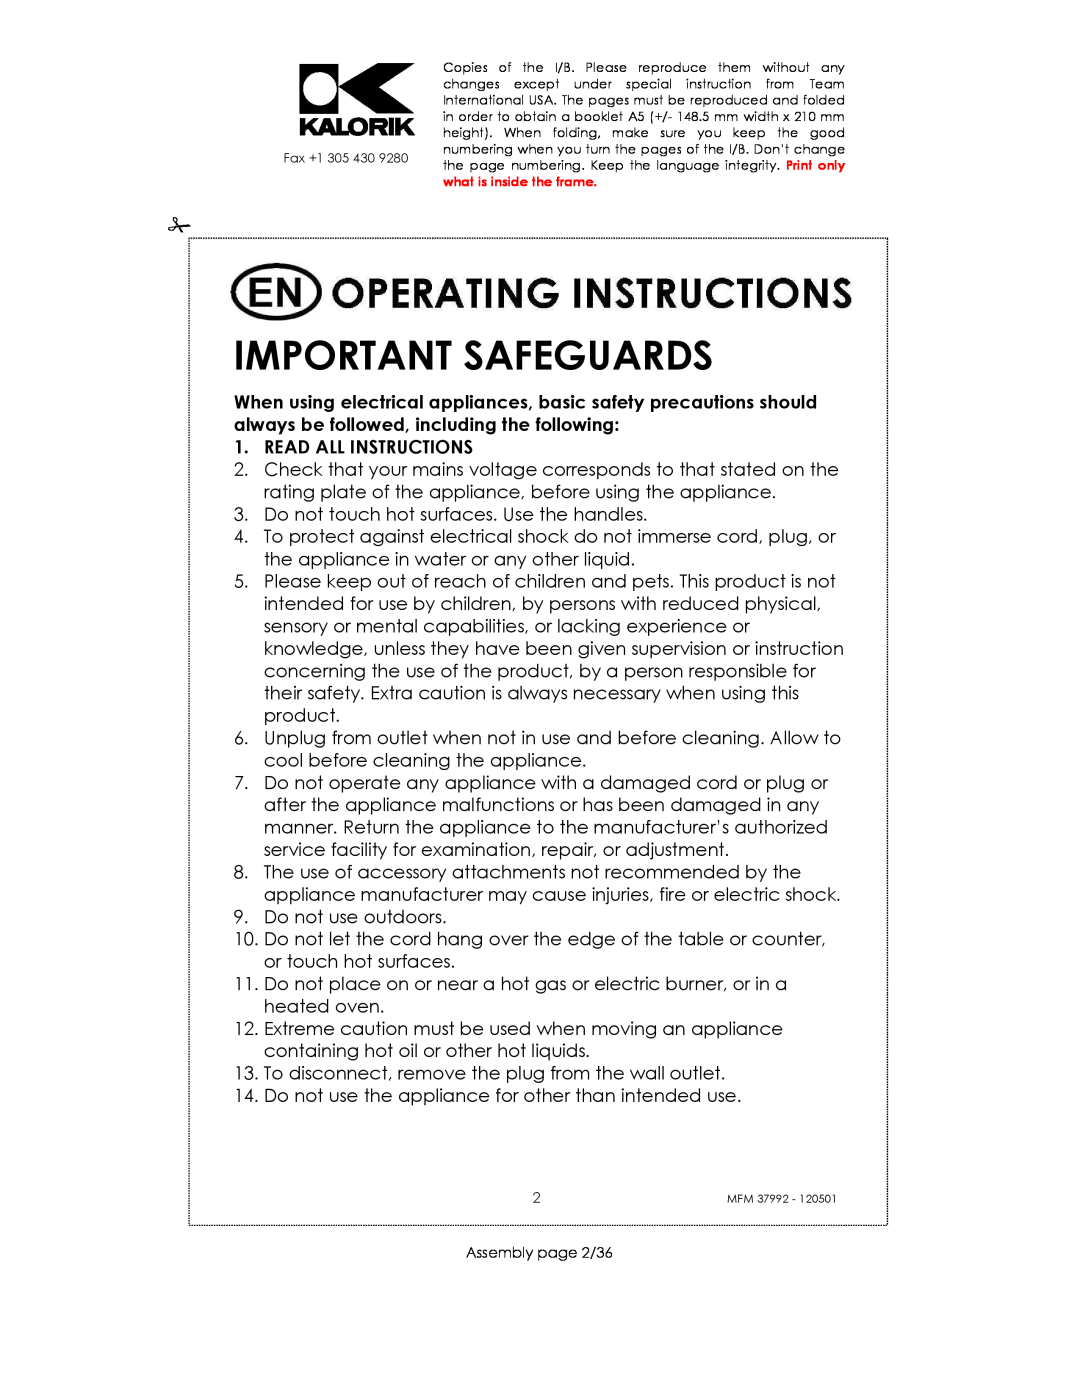 Kalorik MFM 37992 manual Important Safeguards, Read All Instructions 